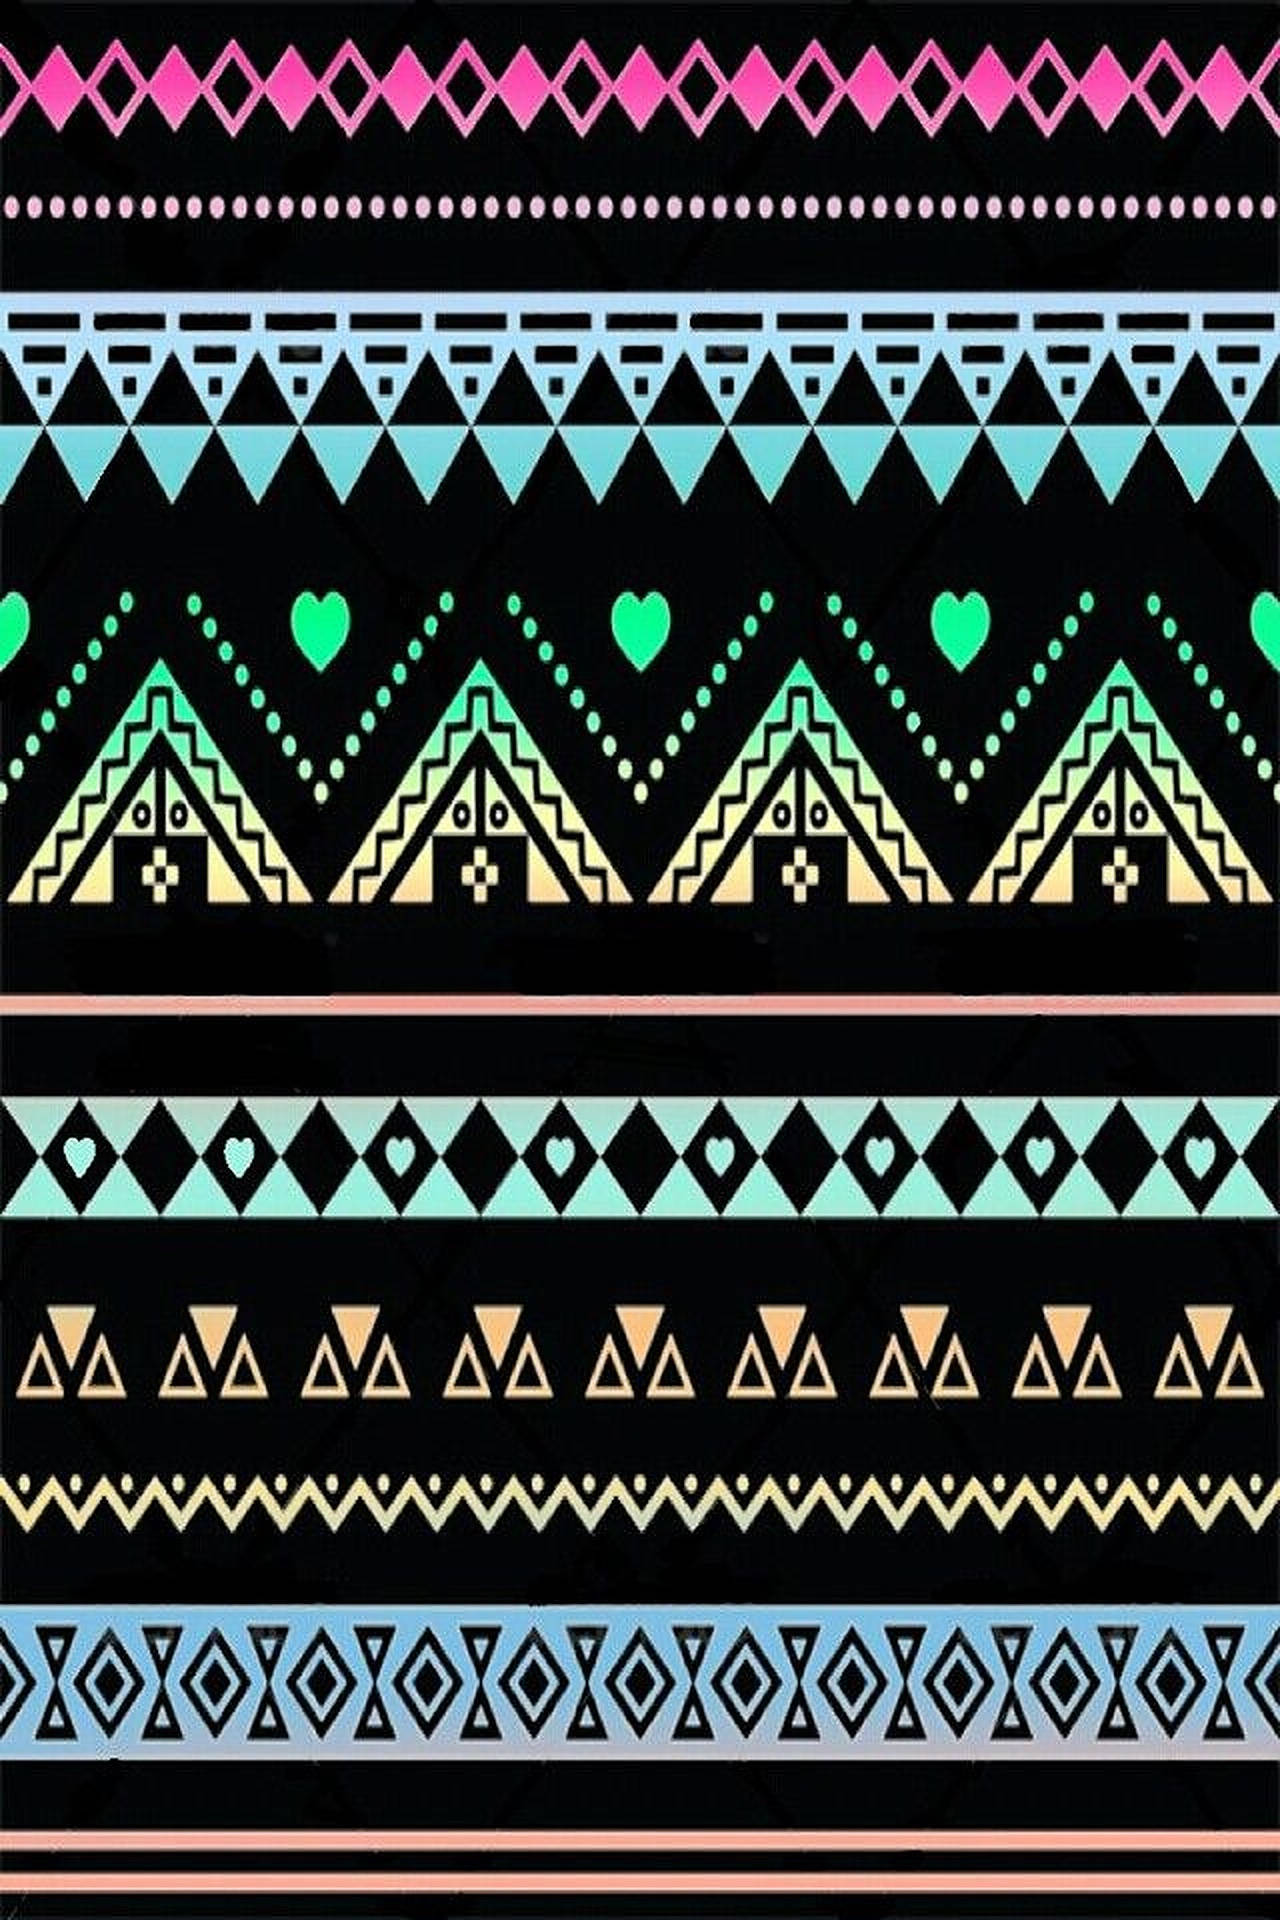 Cute Tribal Pattern Wallpapers